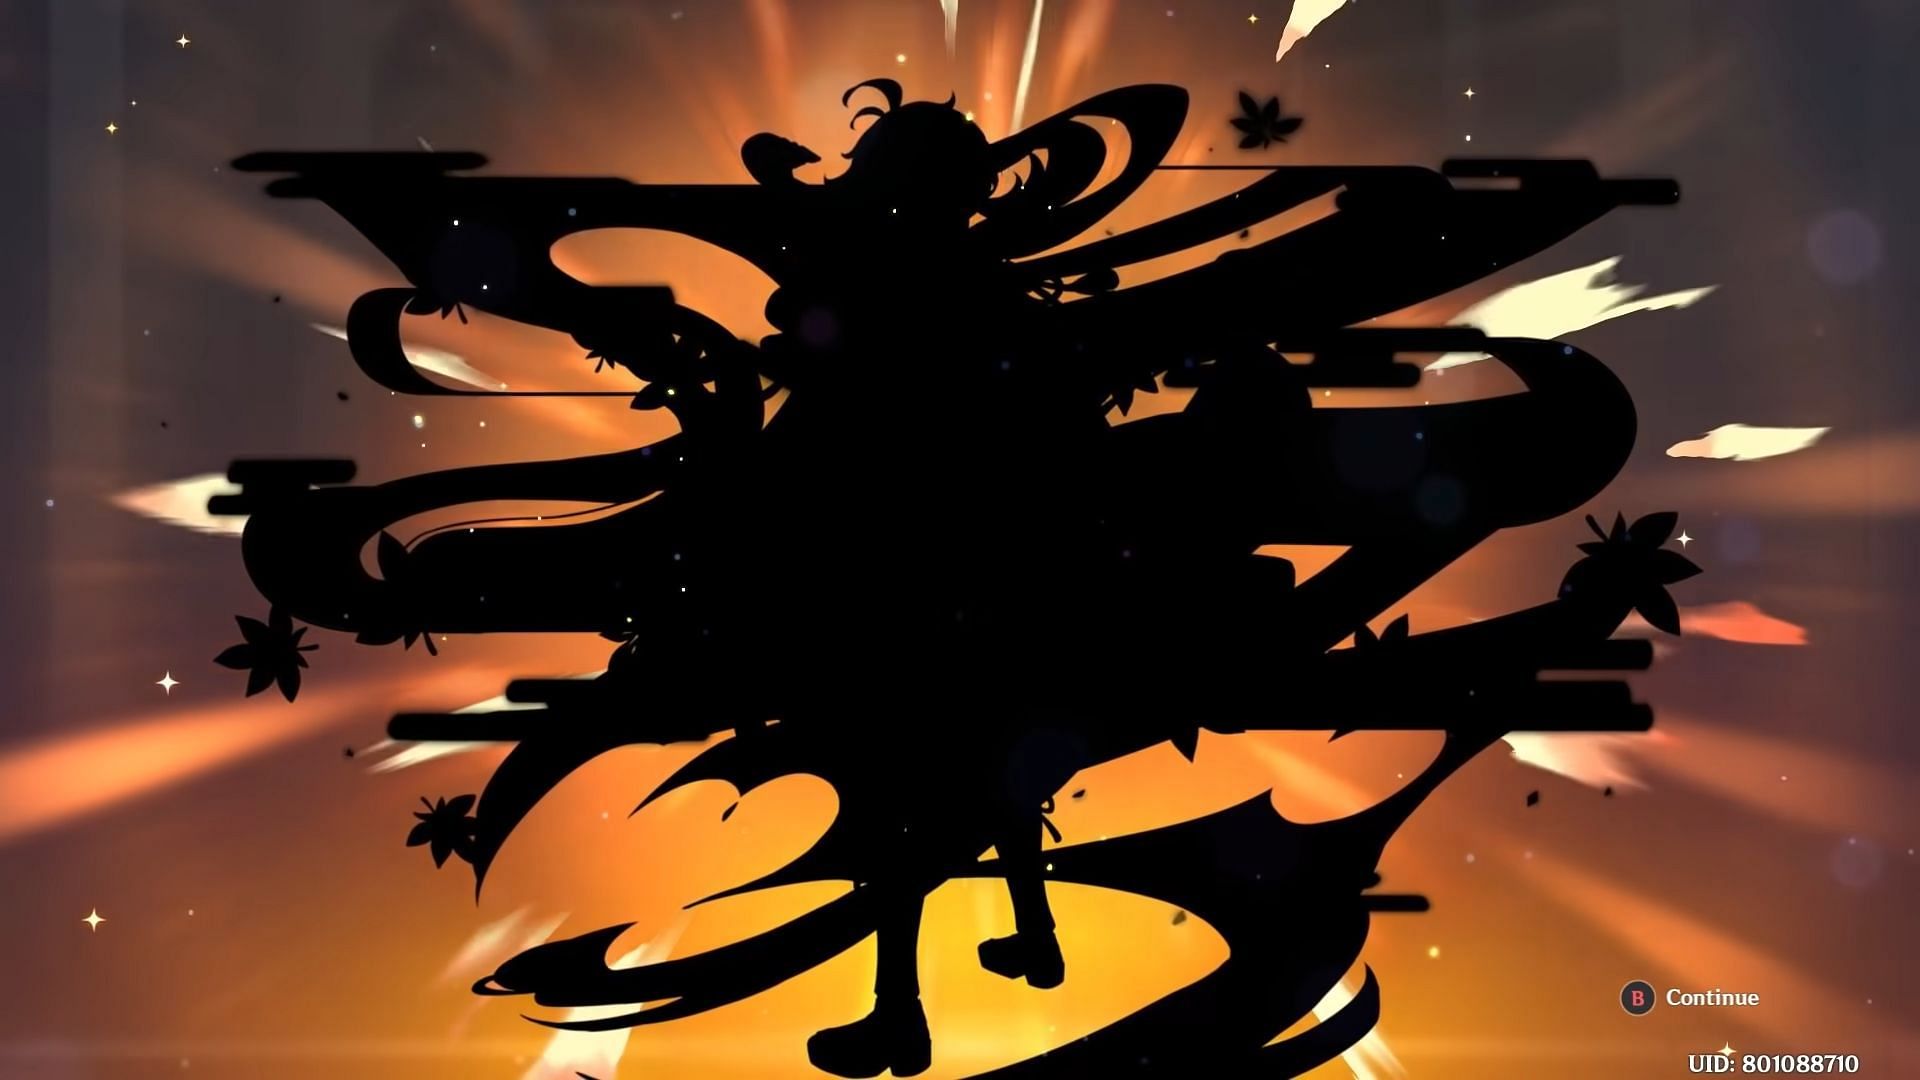 Kazuha Splash Art Silhouette (Image via Genshin Impact)